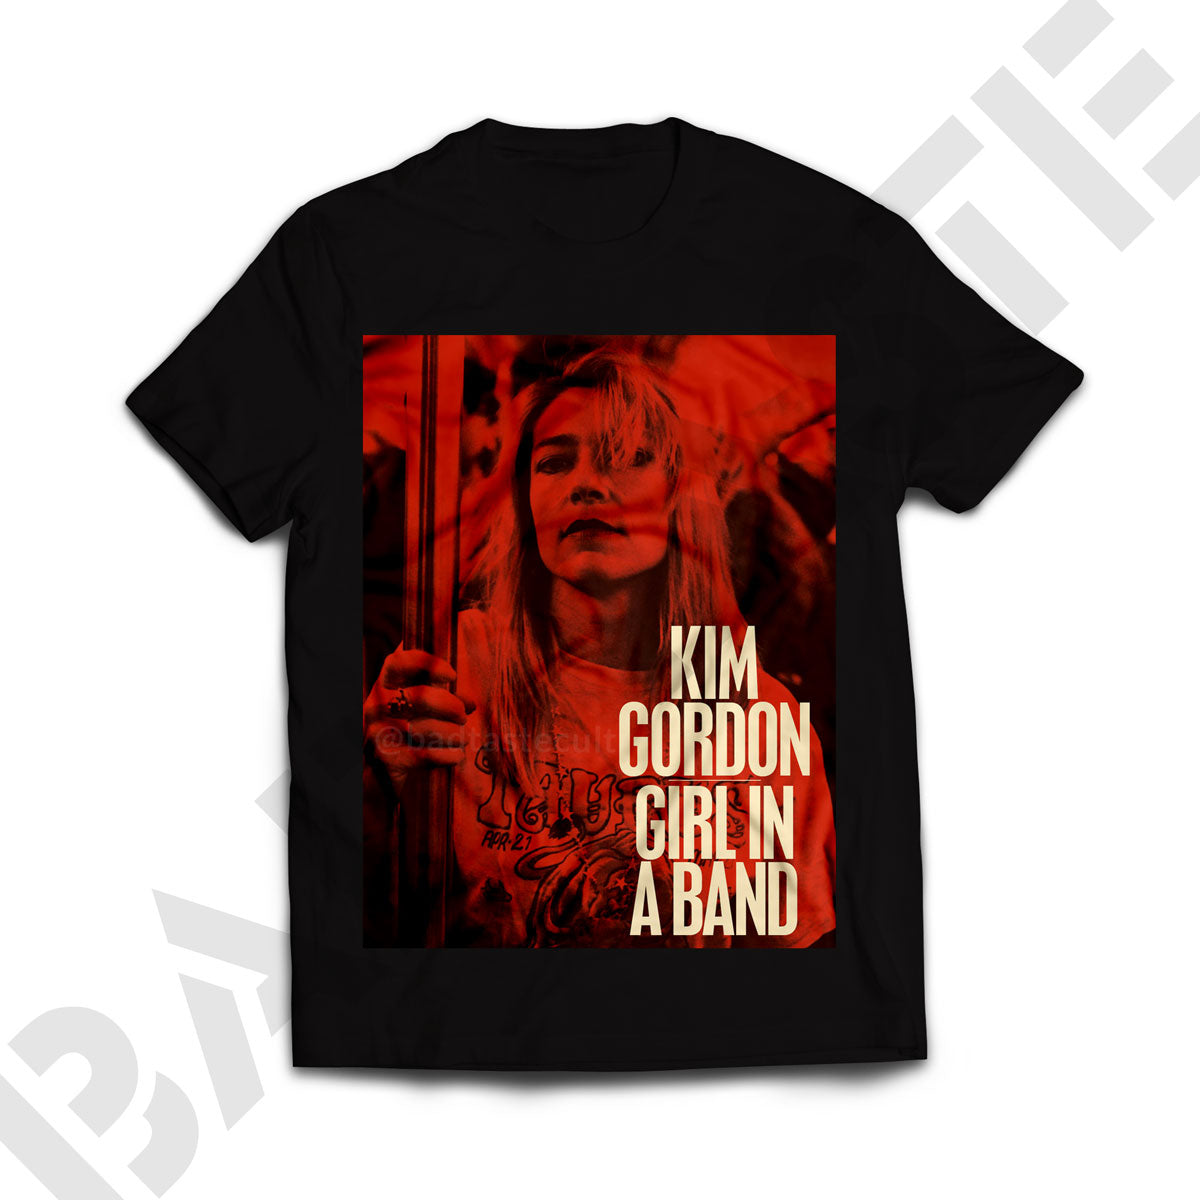 [POLO] Kim Gordon (Sonic Youth) 'Girl in a Band'